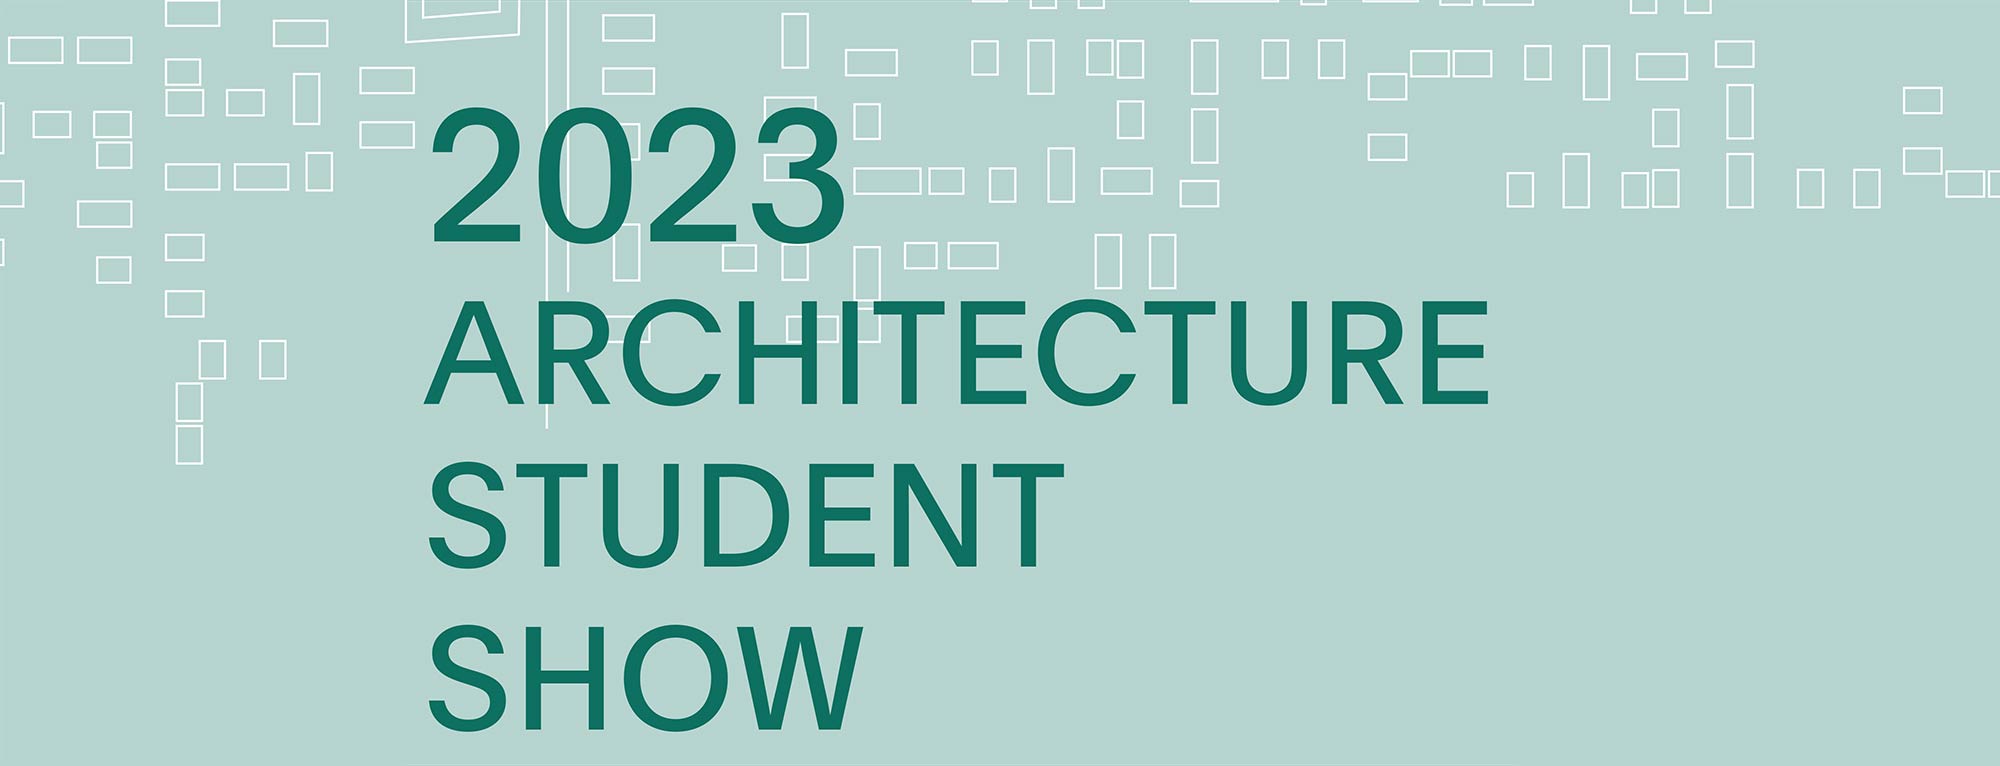 2023 Architecture Student Show